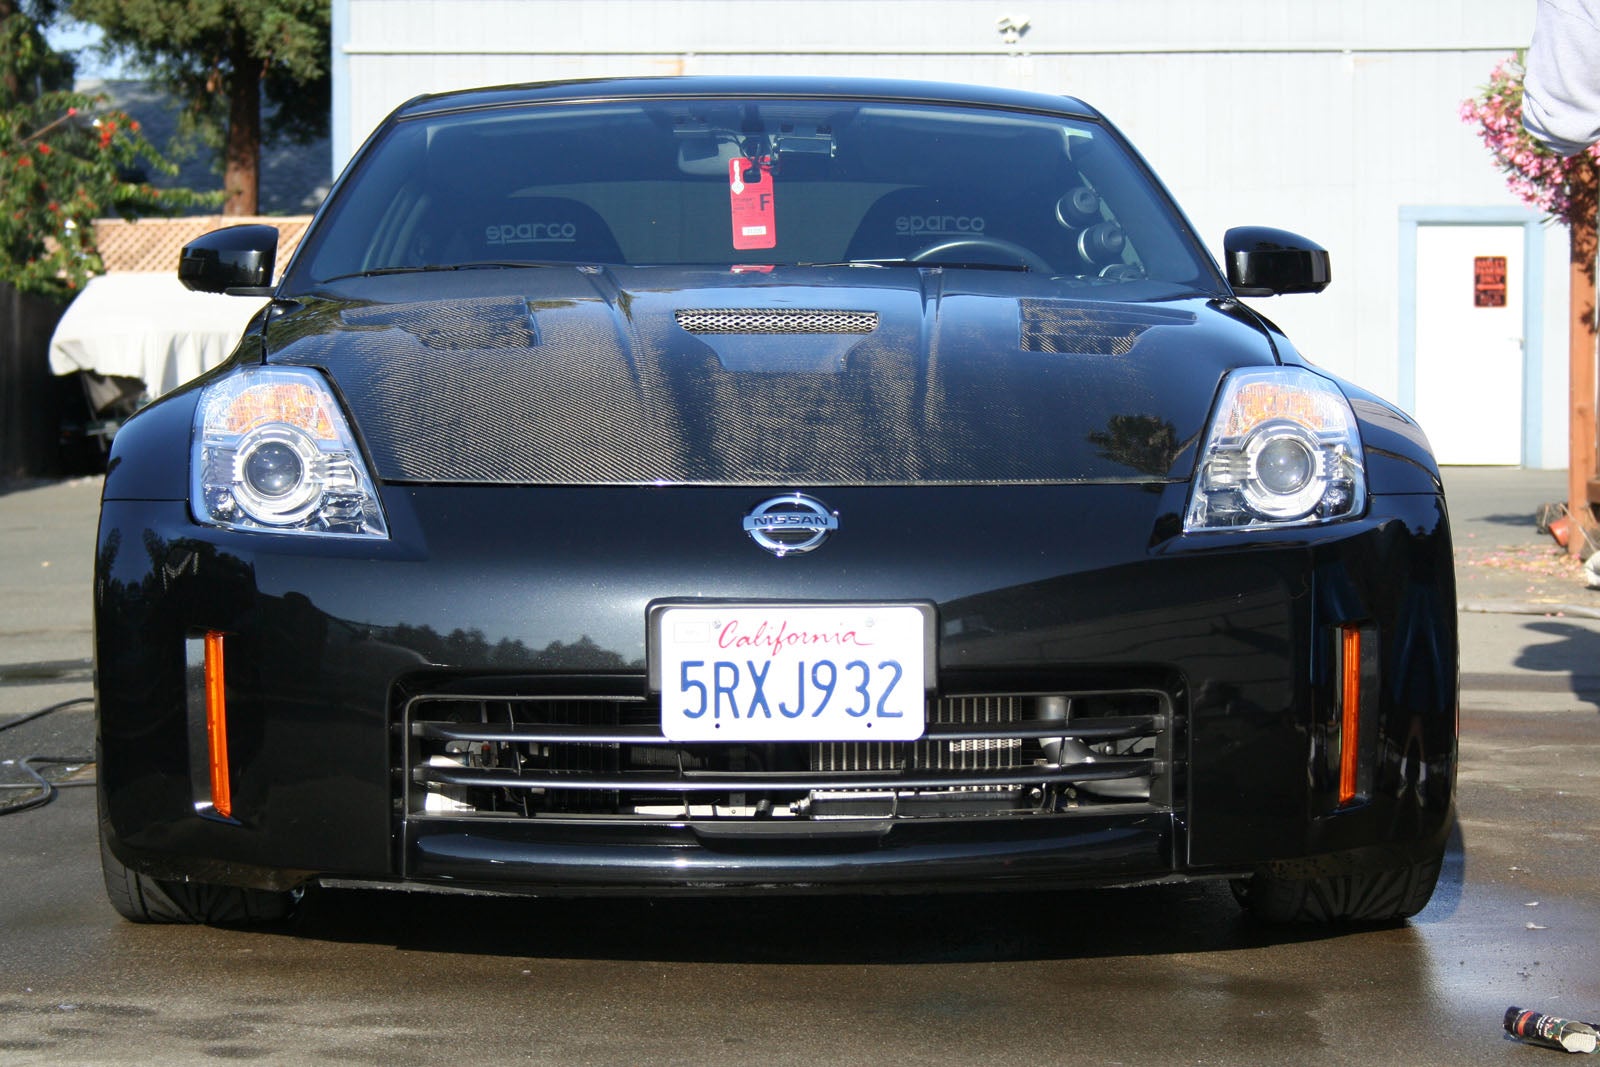 Nissan 350z gas mileage 2013 #6